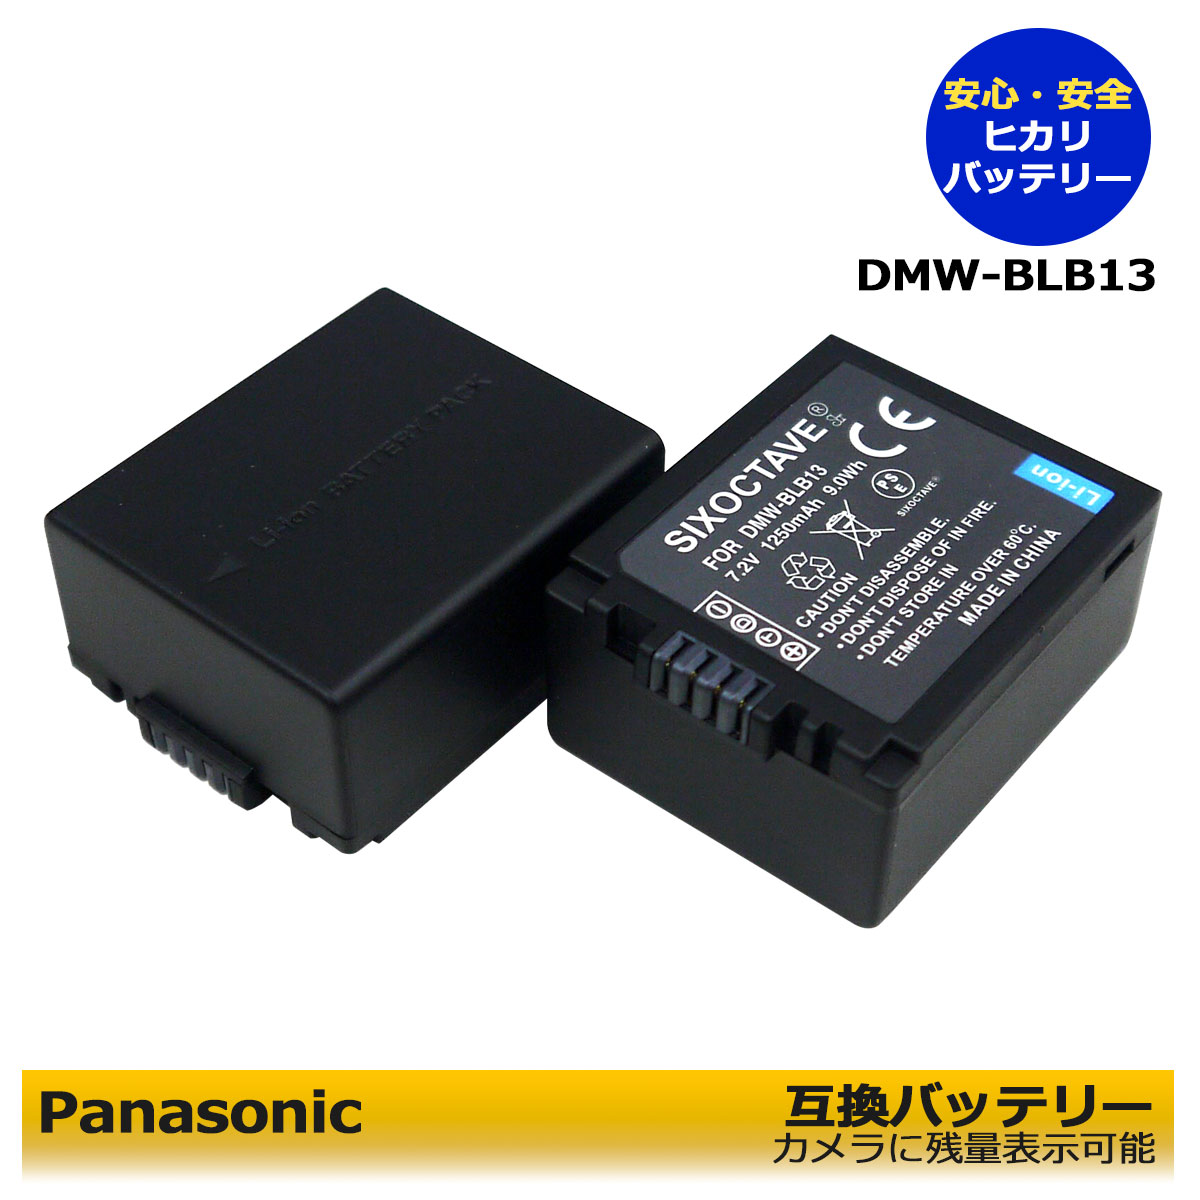 DMW-BLB13　Panasonic 互換バッテリー　2点セット　カメラ本体で残量表示可能！DMC-G1　DMC-GF1K　DMC-GF1C　DMC-GF1　DMC-GH1　DMC-GH1K　DMC-GH1A　DMC-G1W　DMC-G1K　DMC-G10K　DMC-G2　DMC-G2W　DMC-G2K